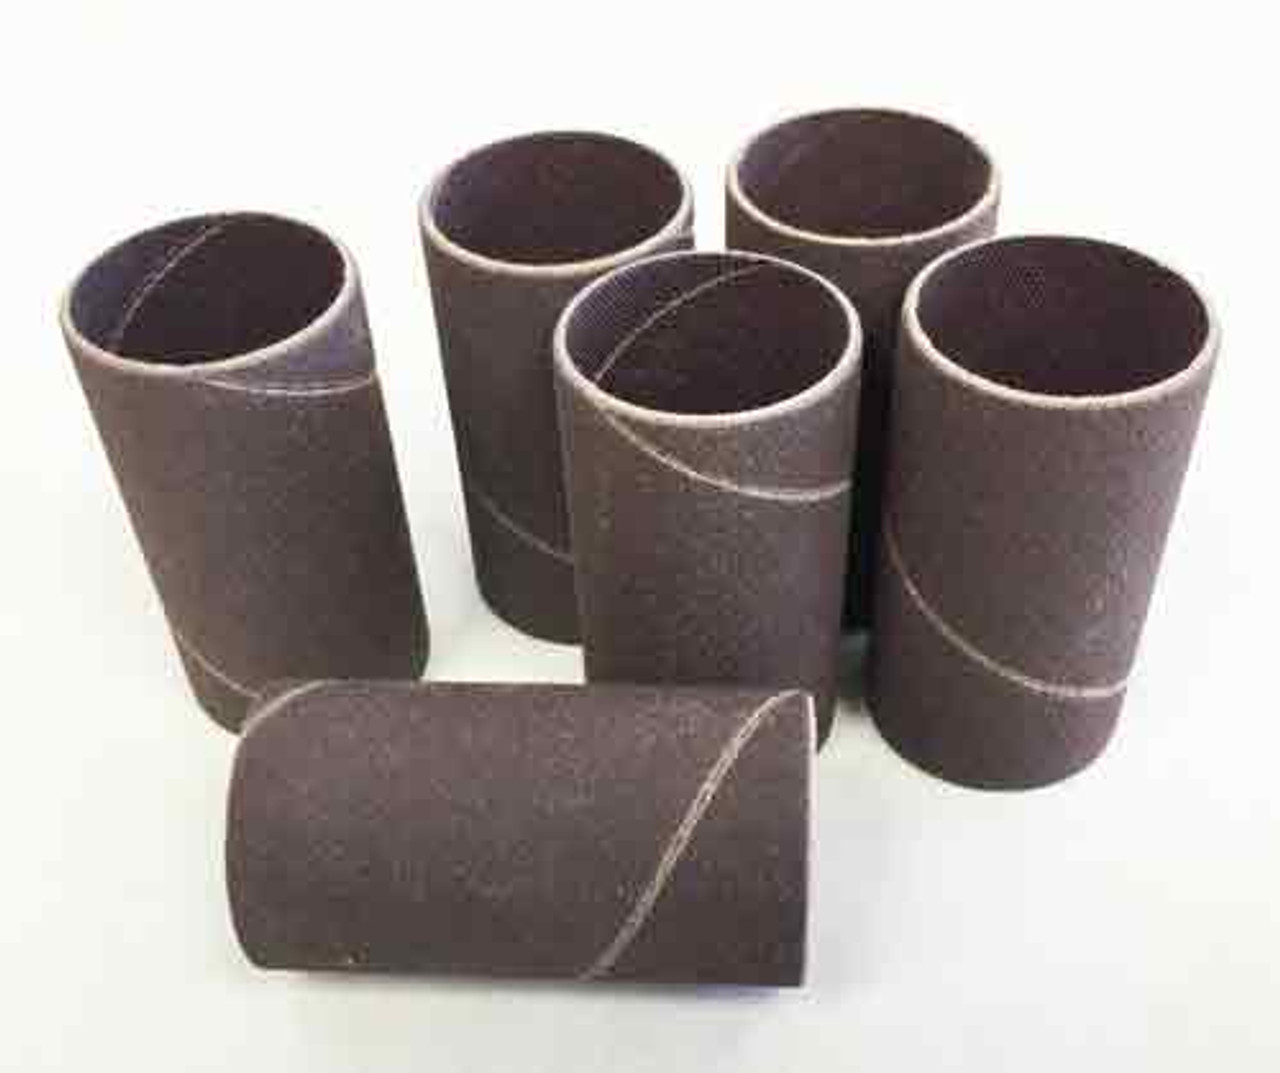 These are aluminum oxide resin bond Sanding Sleeve 1 x 2 Medium (80 Grit).